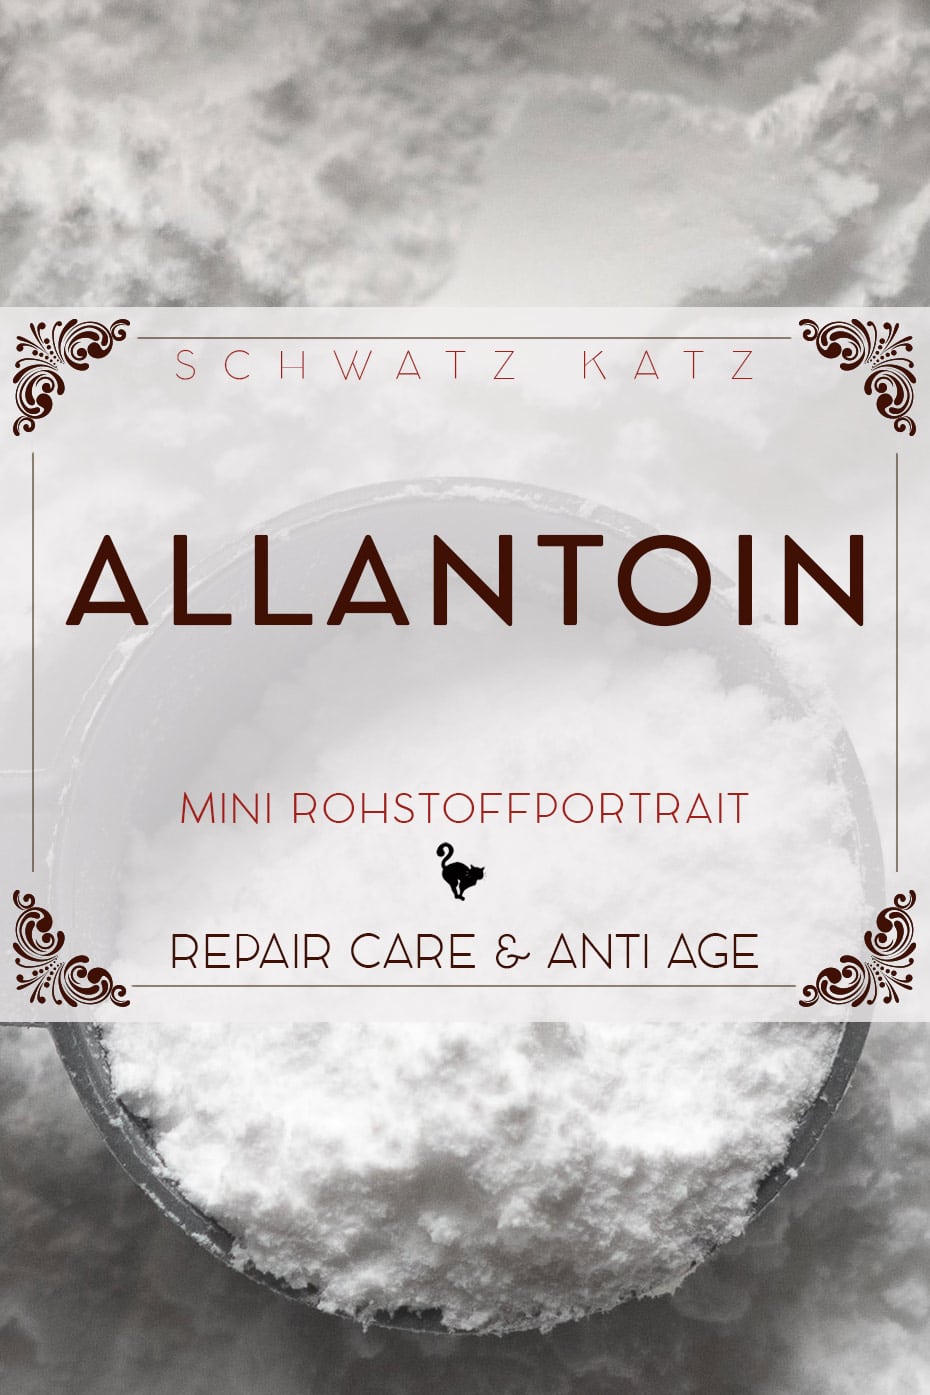 Allantoin Mini Rohstoffportrait auf Schwatz Katz